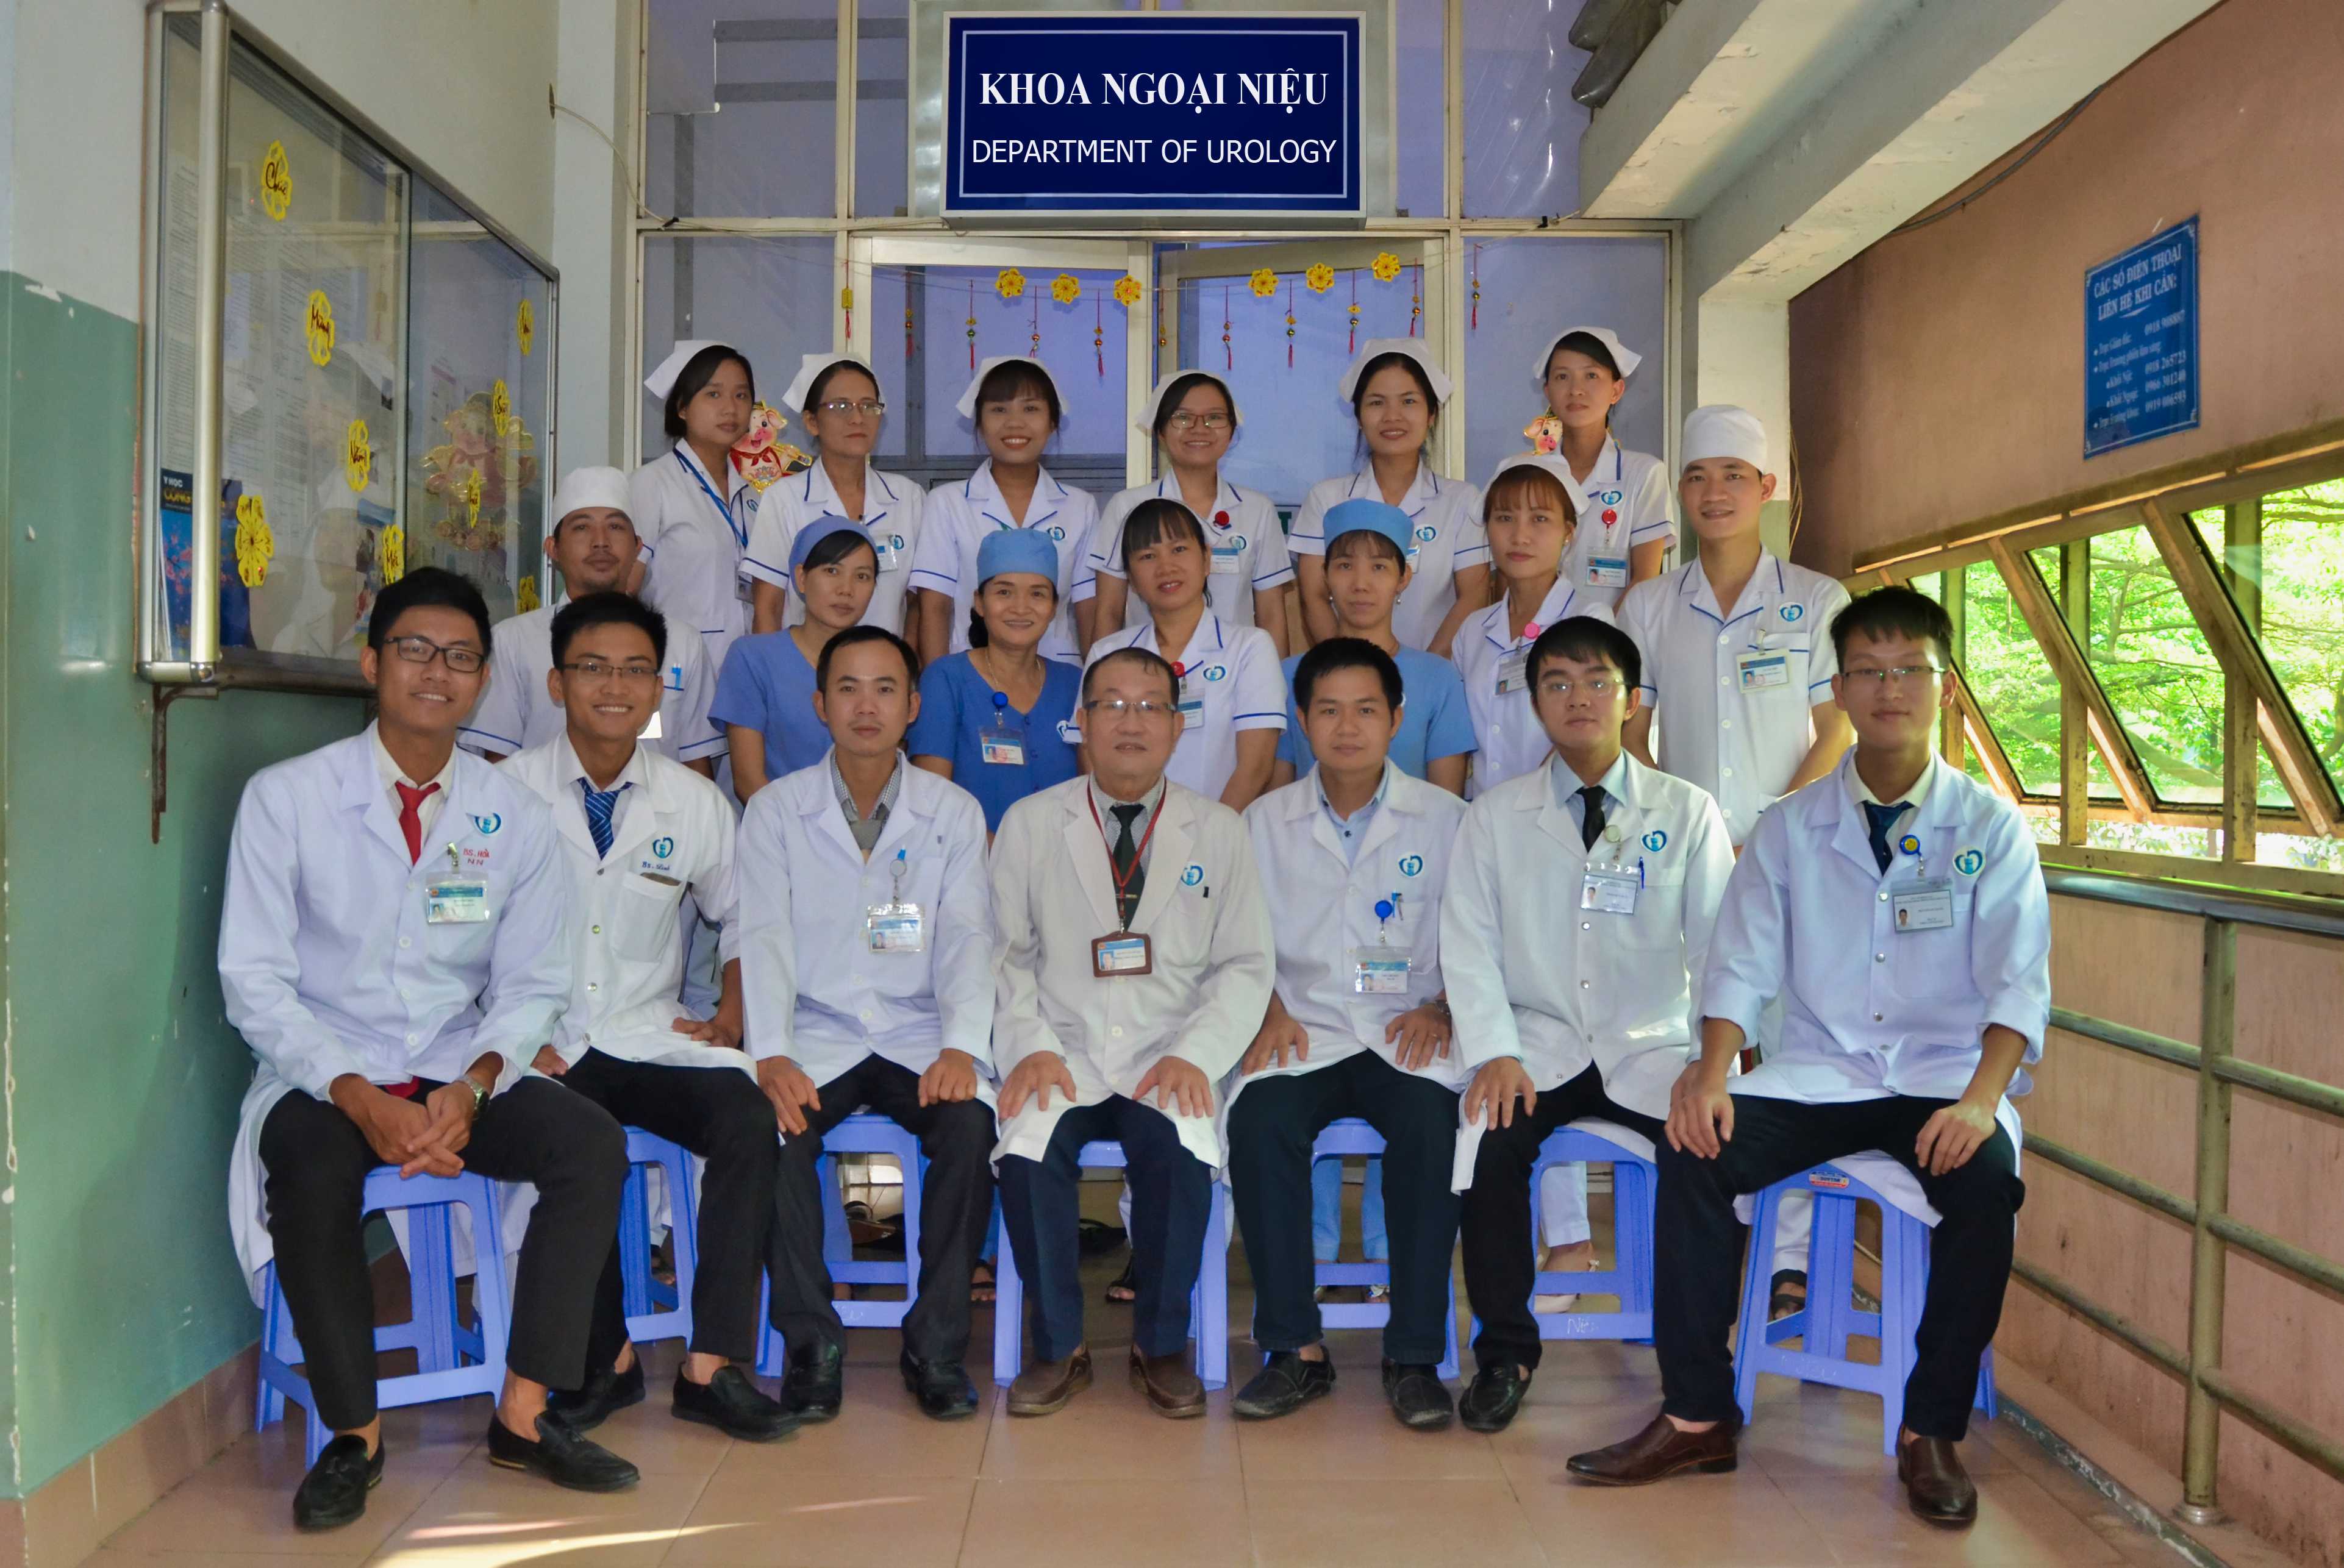 Khoa Ngoại Niệu (Department Of Urology)